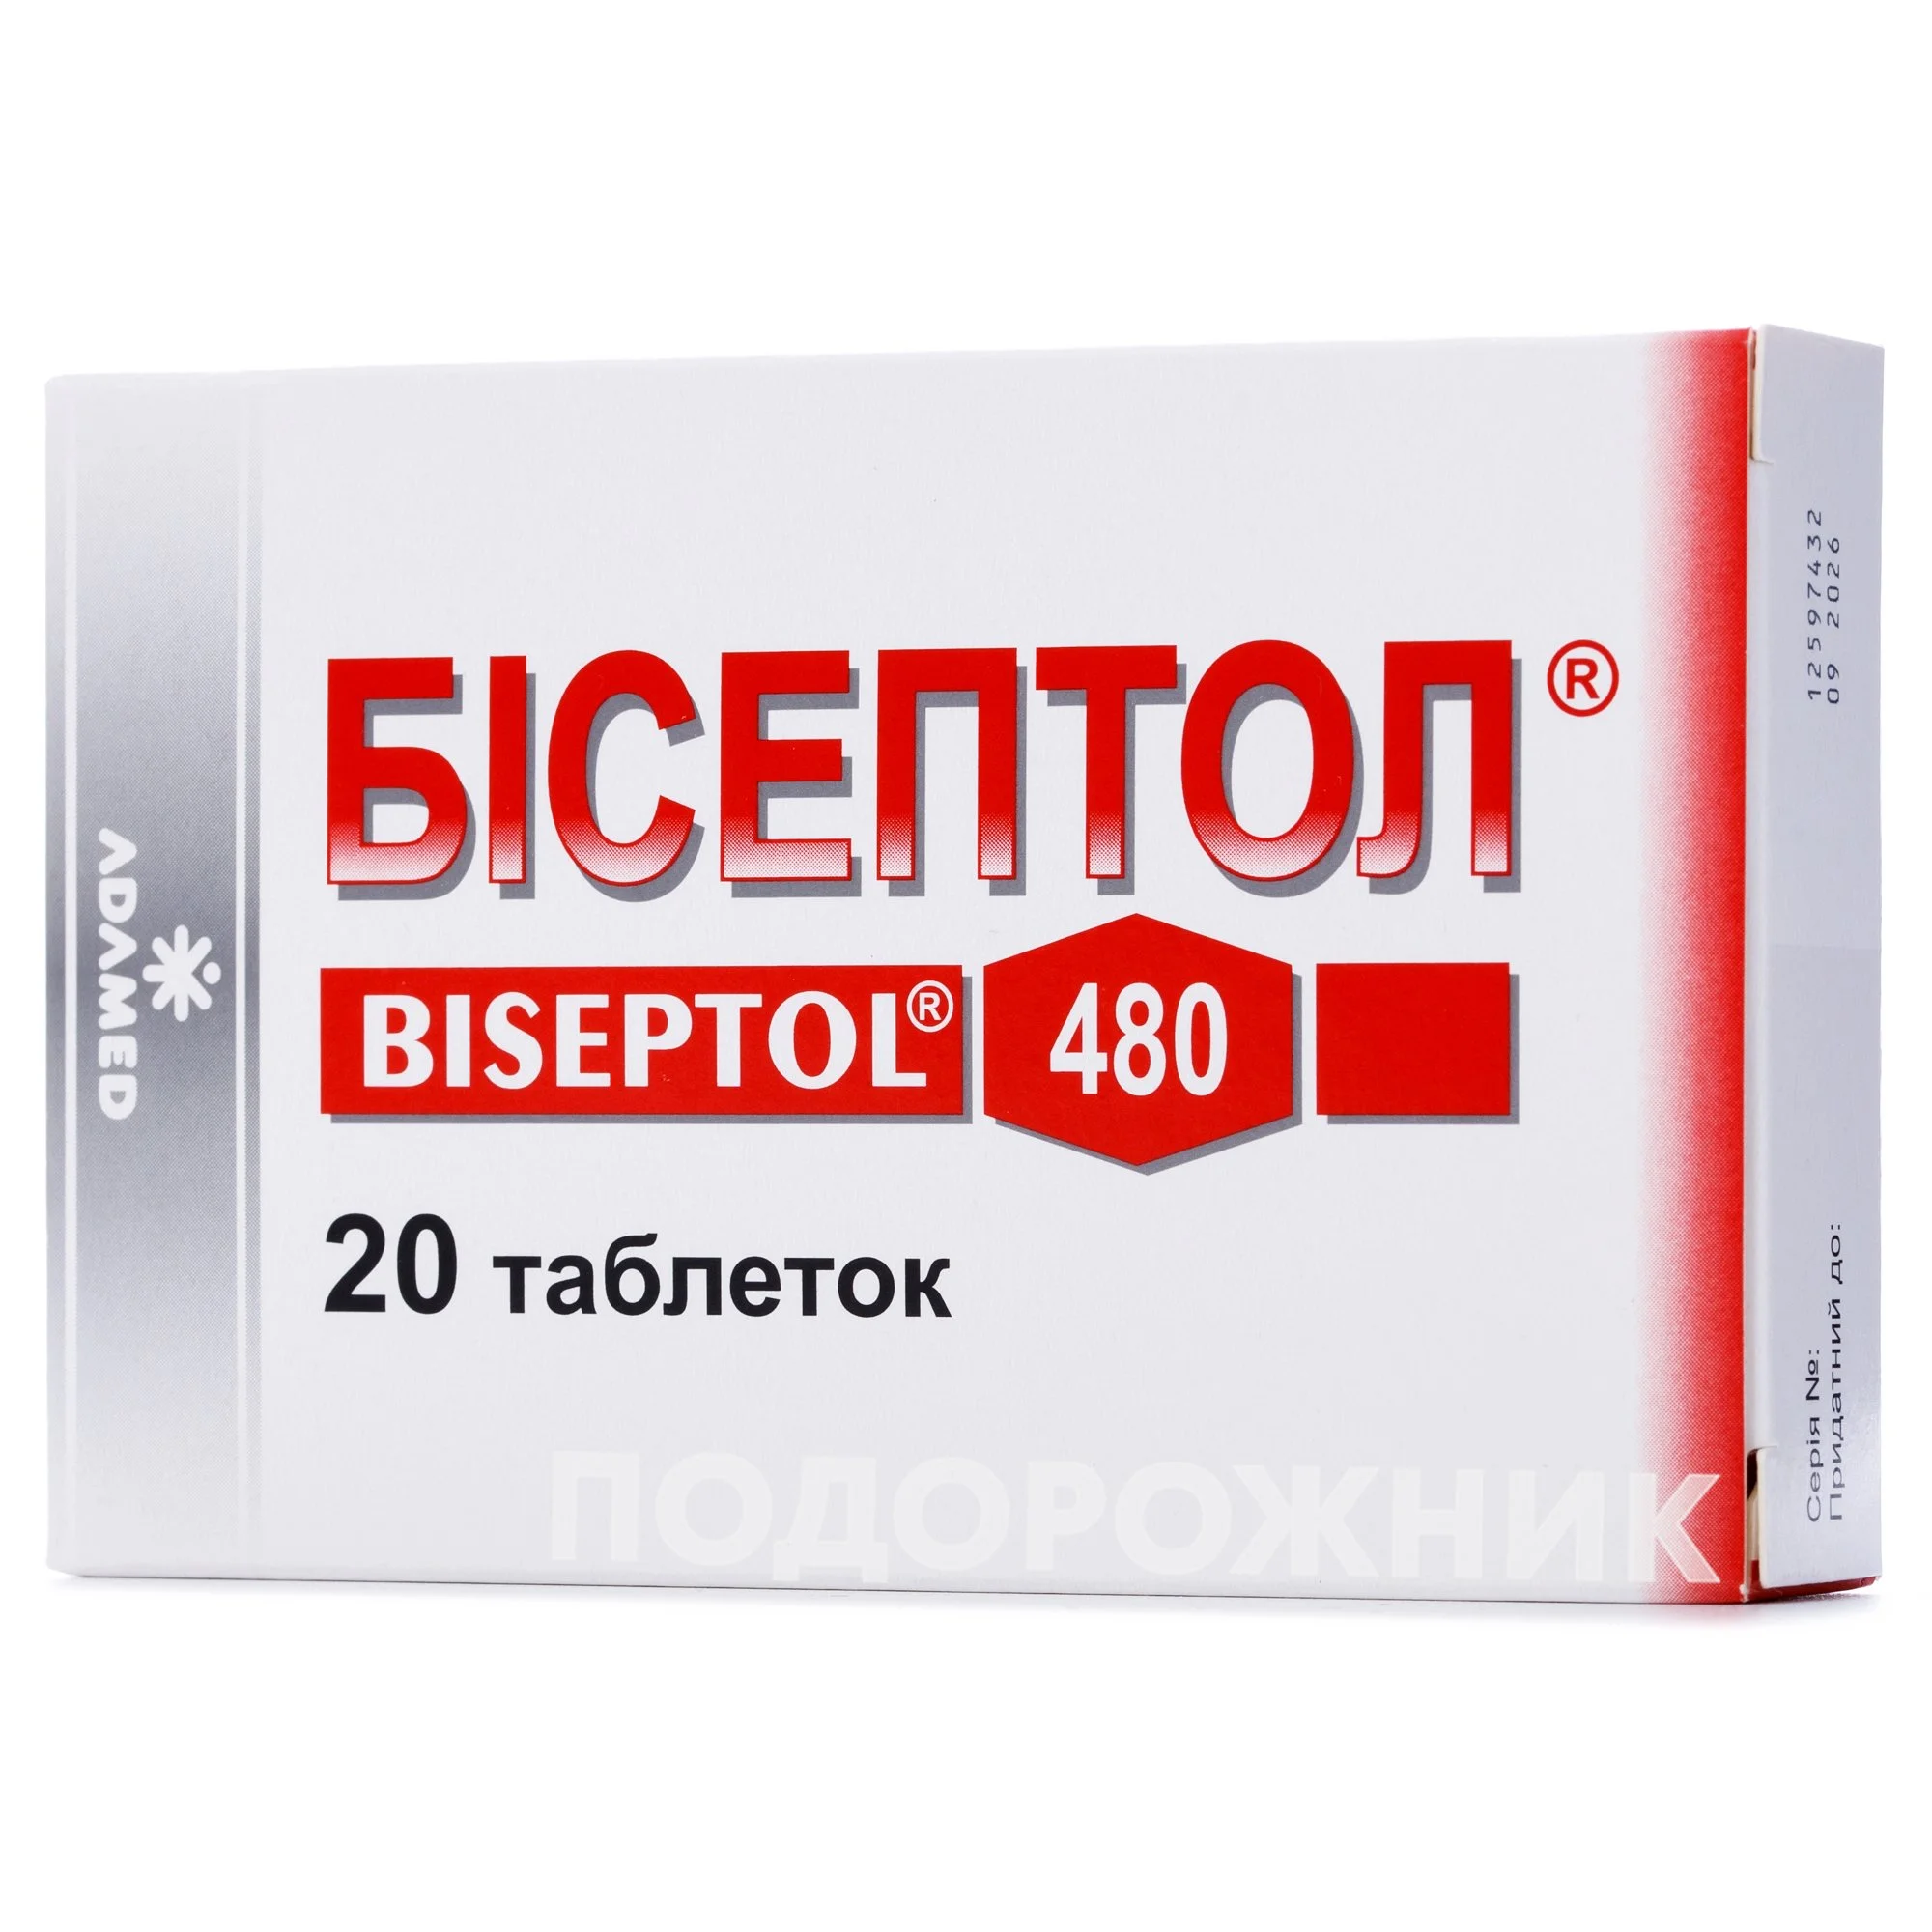 Бисептол 480 таблетки. Бисептол 200 мг. Противовирусное Бисептол. Бисептол комбинированный препарат. Бисептол 480 концентрат для приготовления